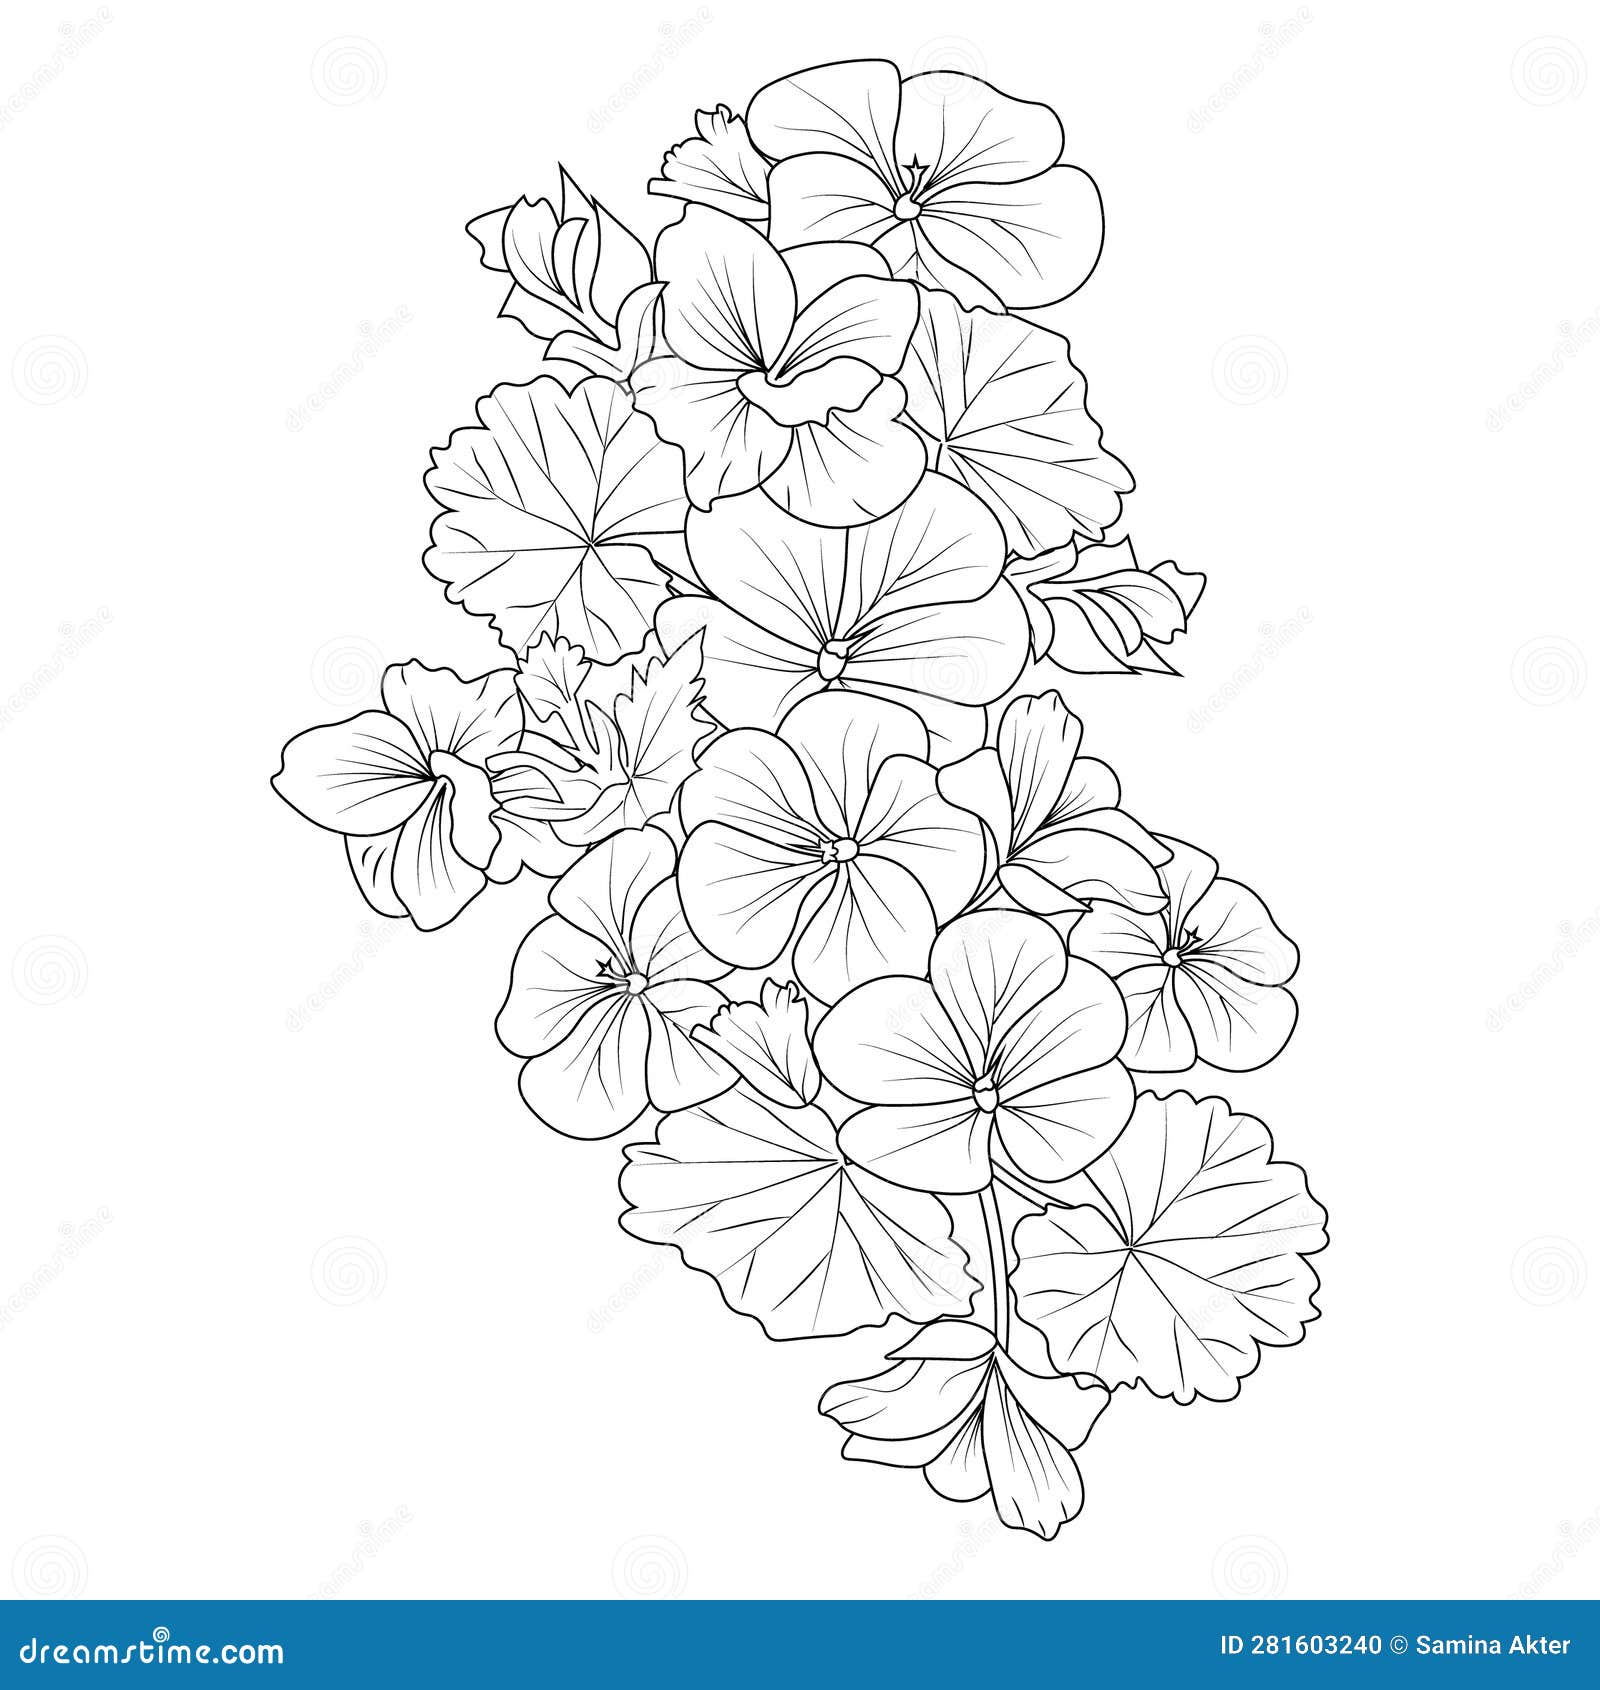 Geranium Flower Doodle Art Geranium Pelargonium Bouquet Drawings Tattoo  Geranium Flower Drawing Line Art Geranium Flower Stock Vector   Illustration of design doodle 281603240